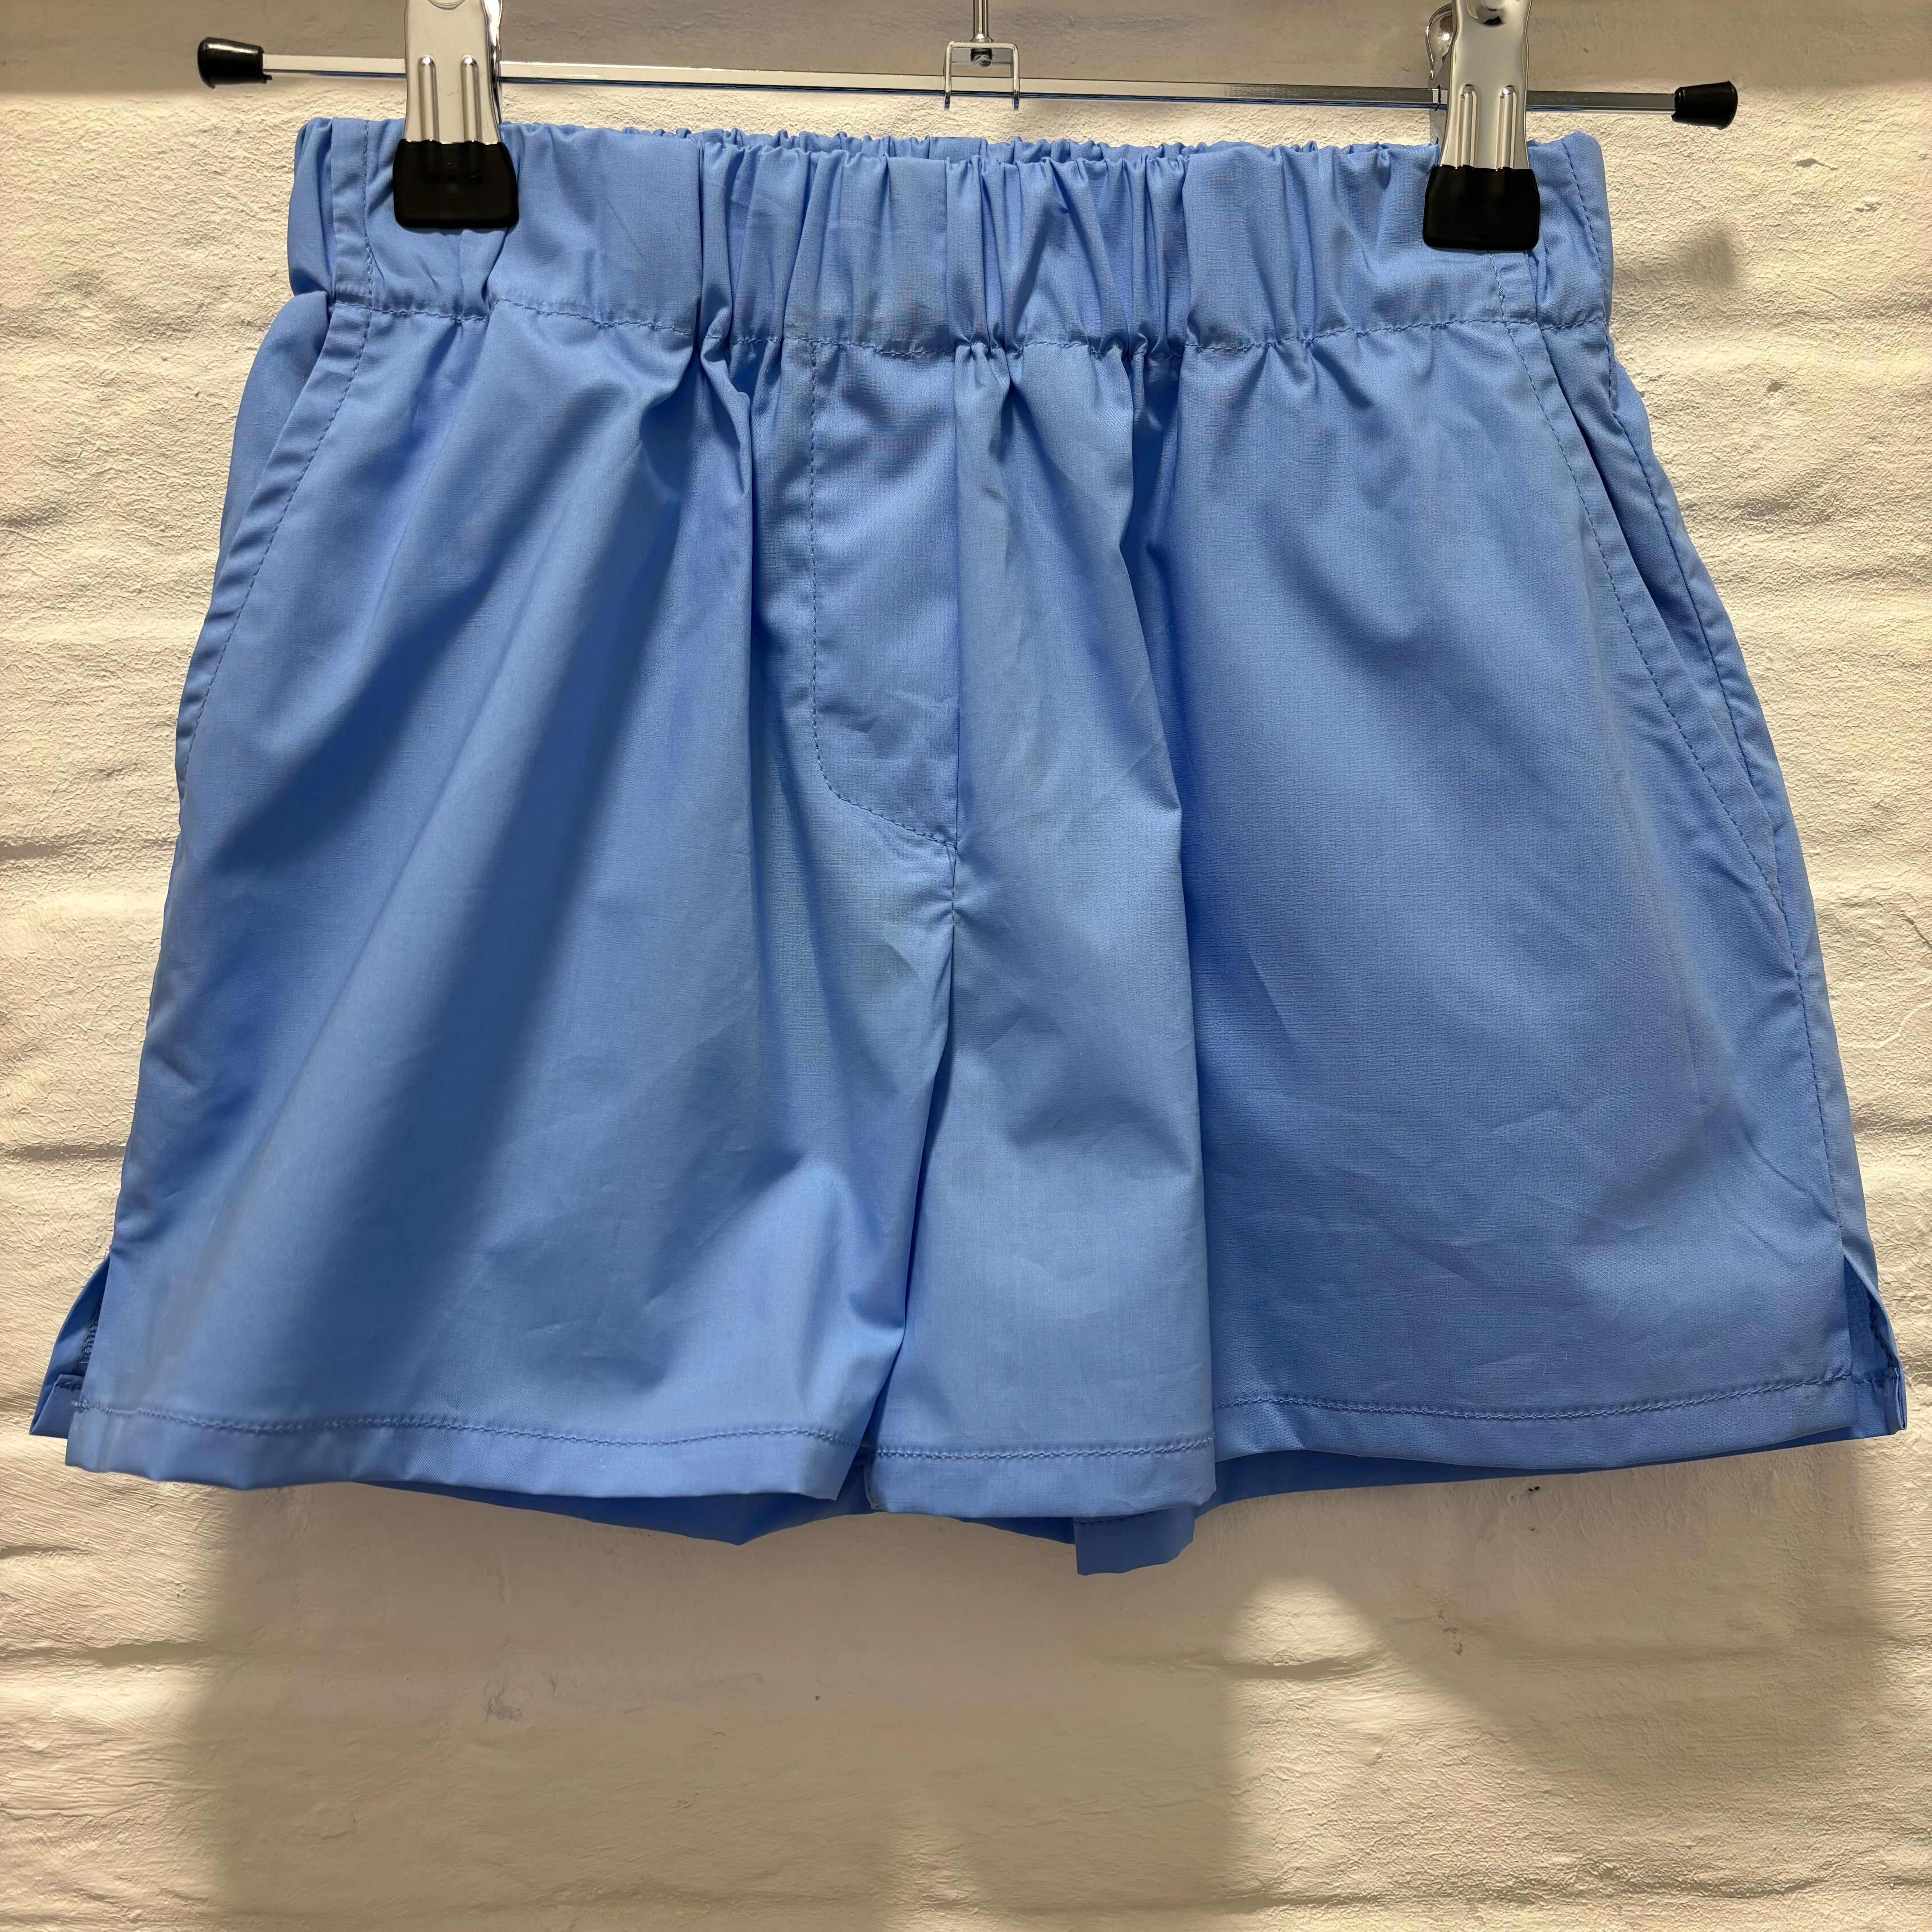 Dal Lago - frankie shorts - blue